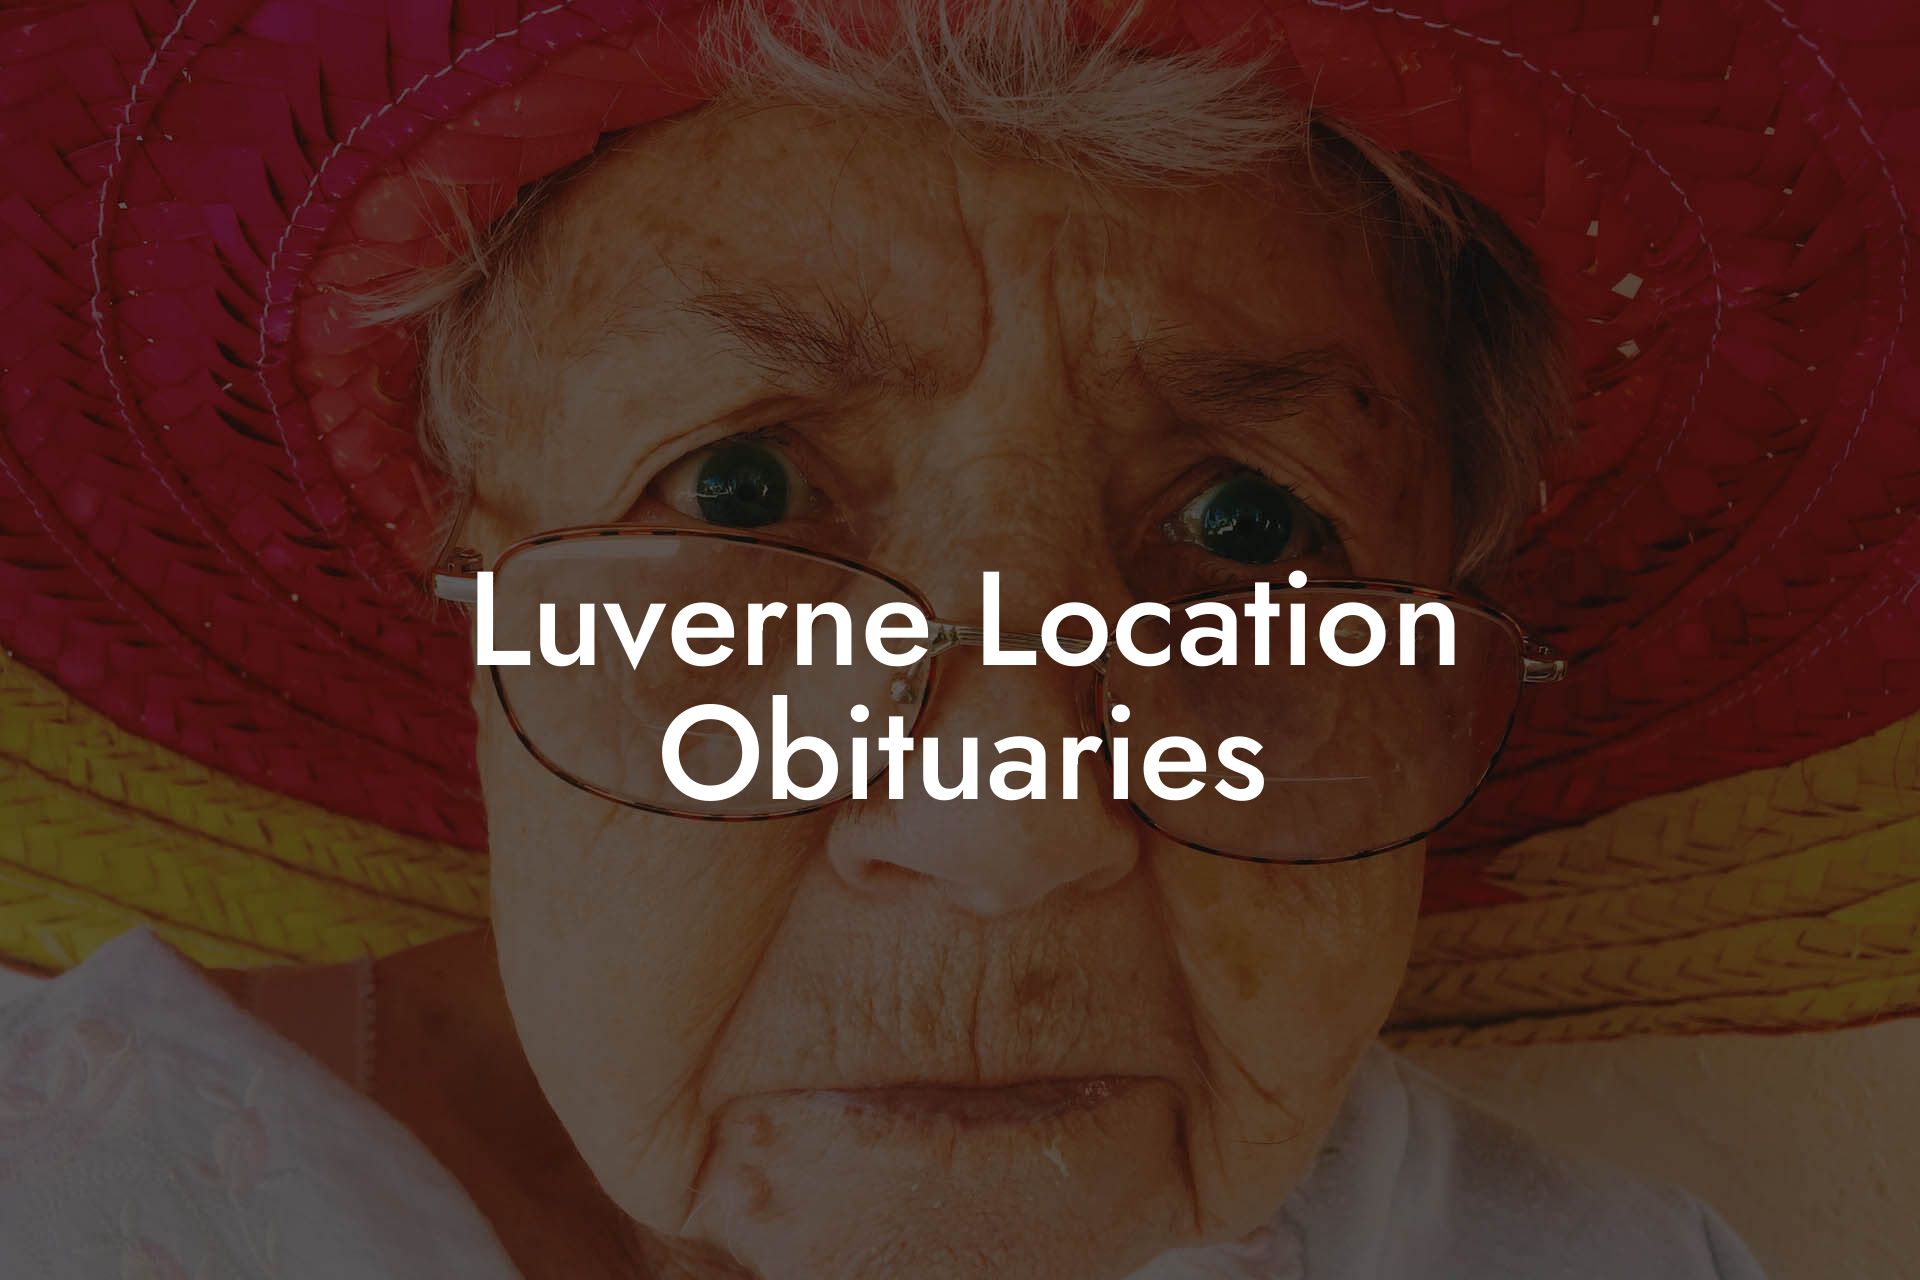 Luverne Location Obituaries